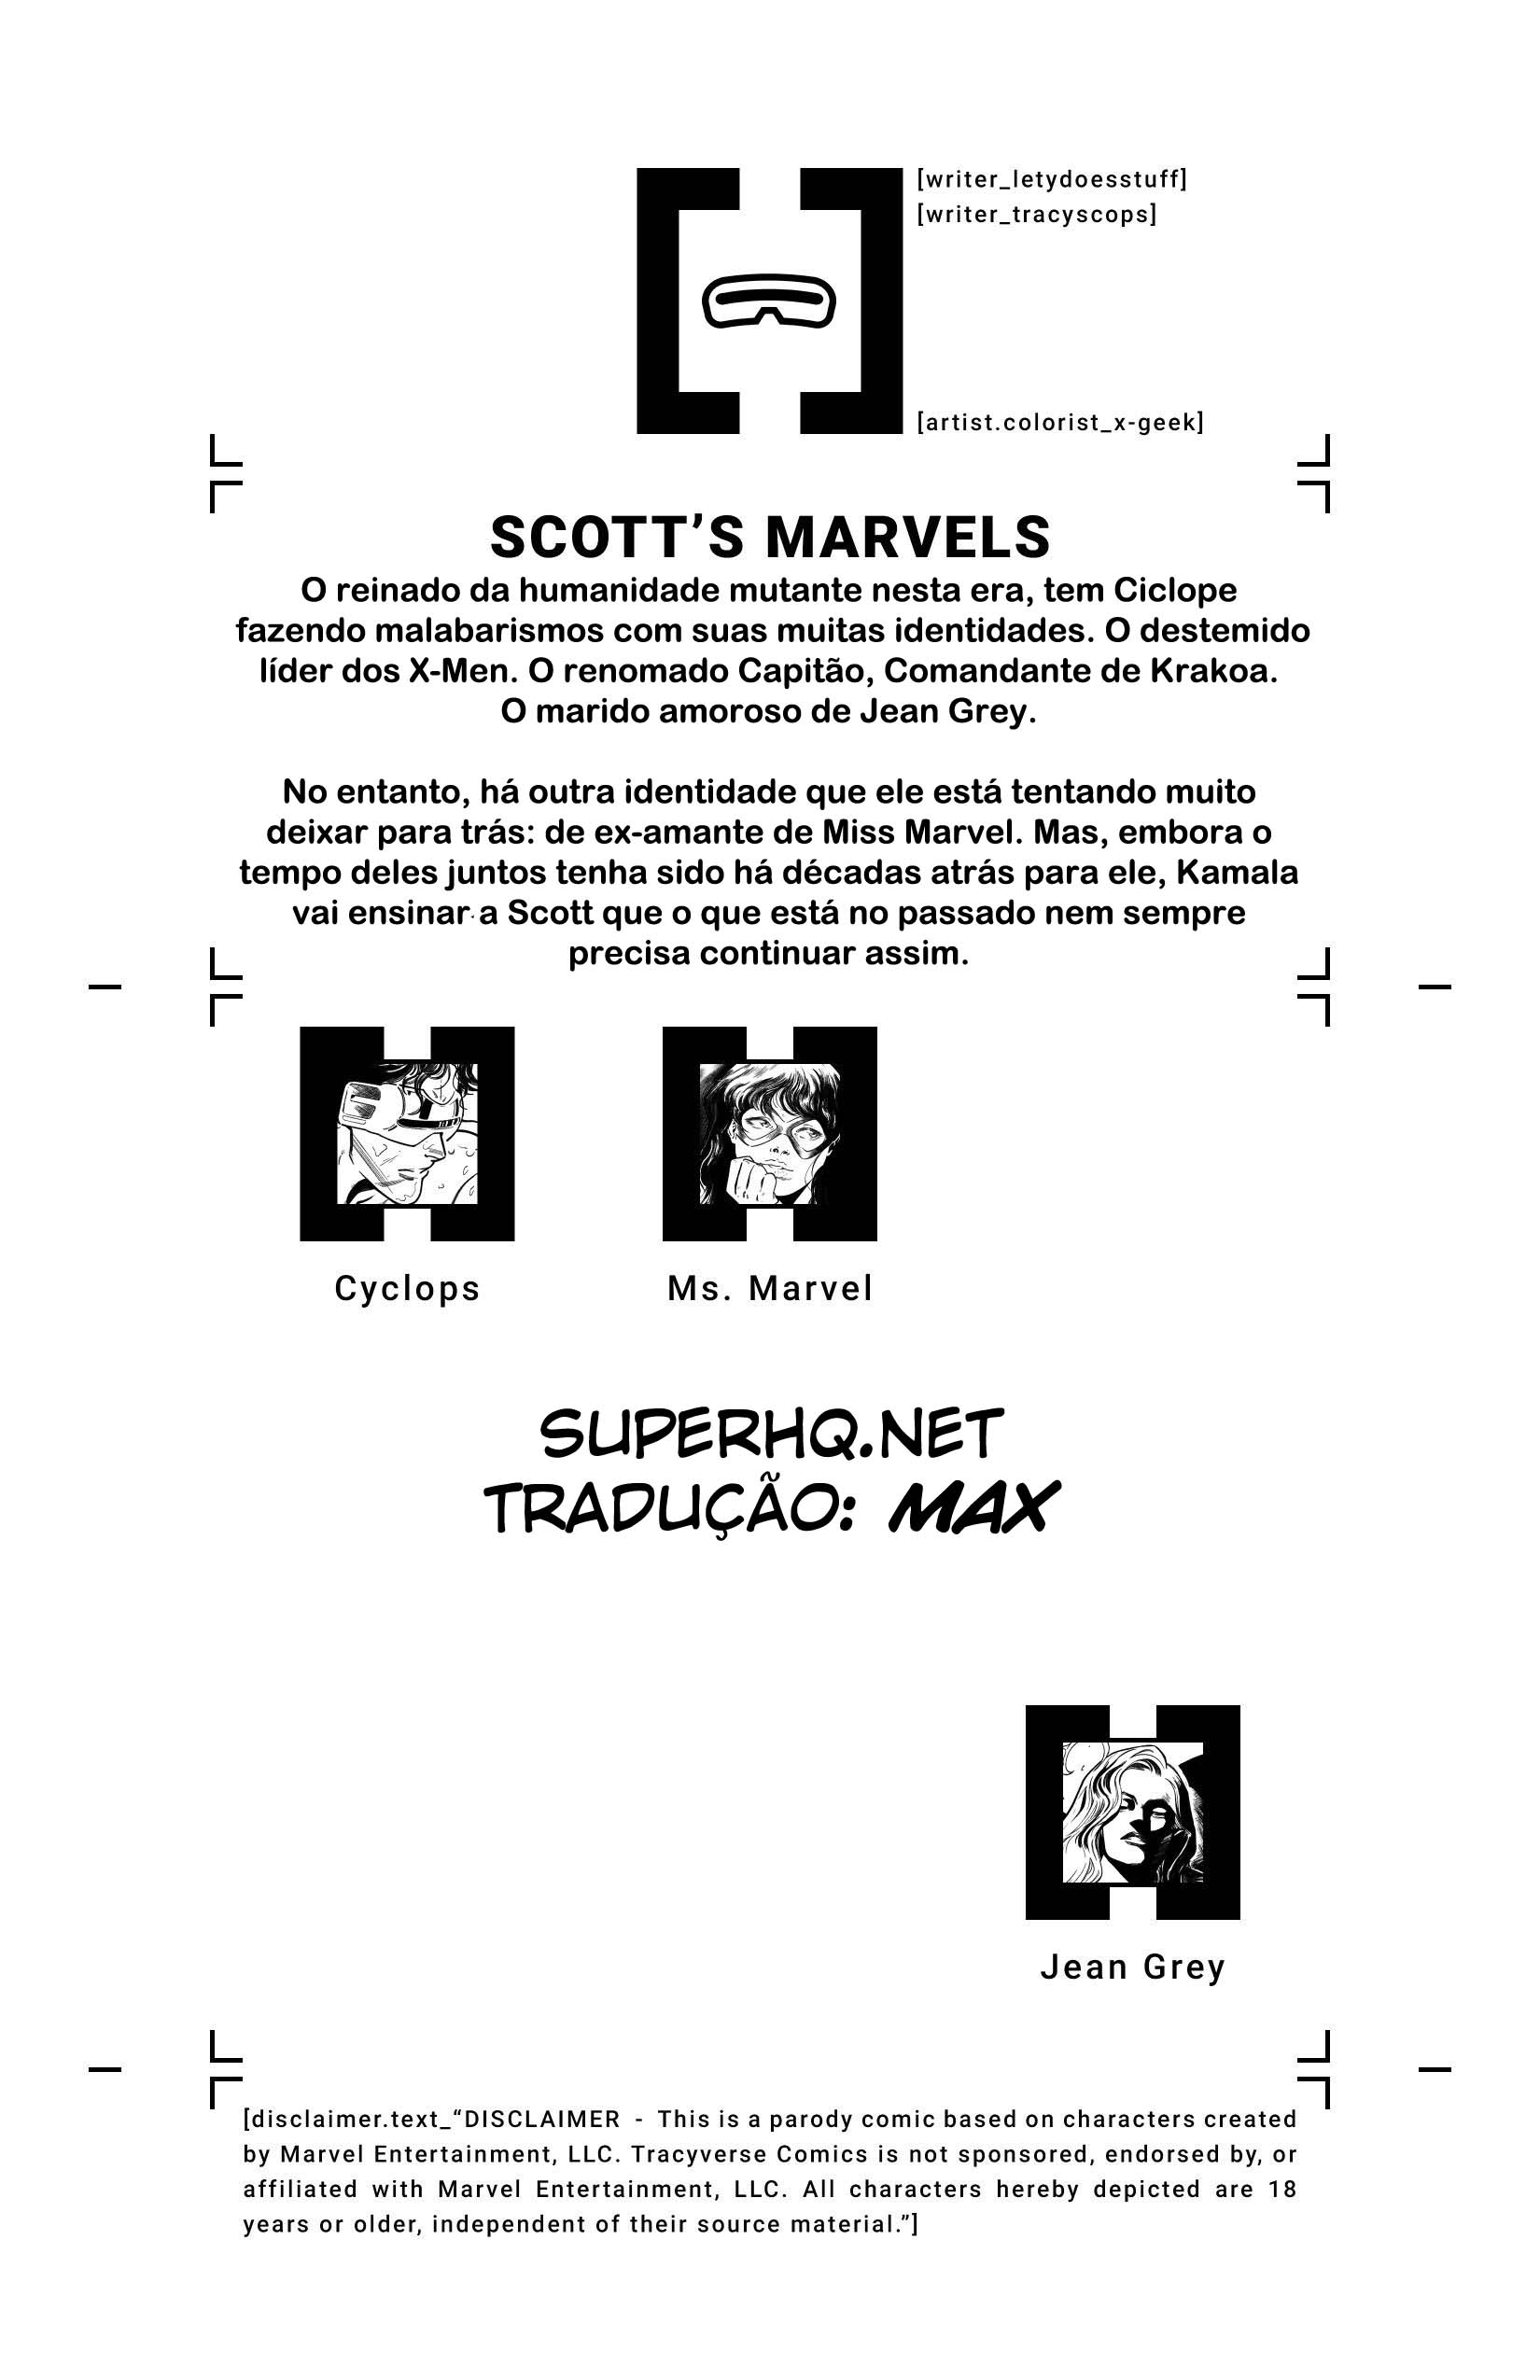 House of XXX, Scott's Marvels